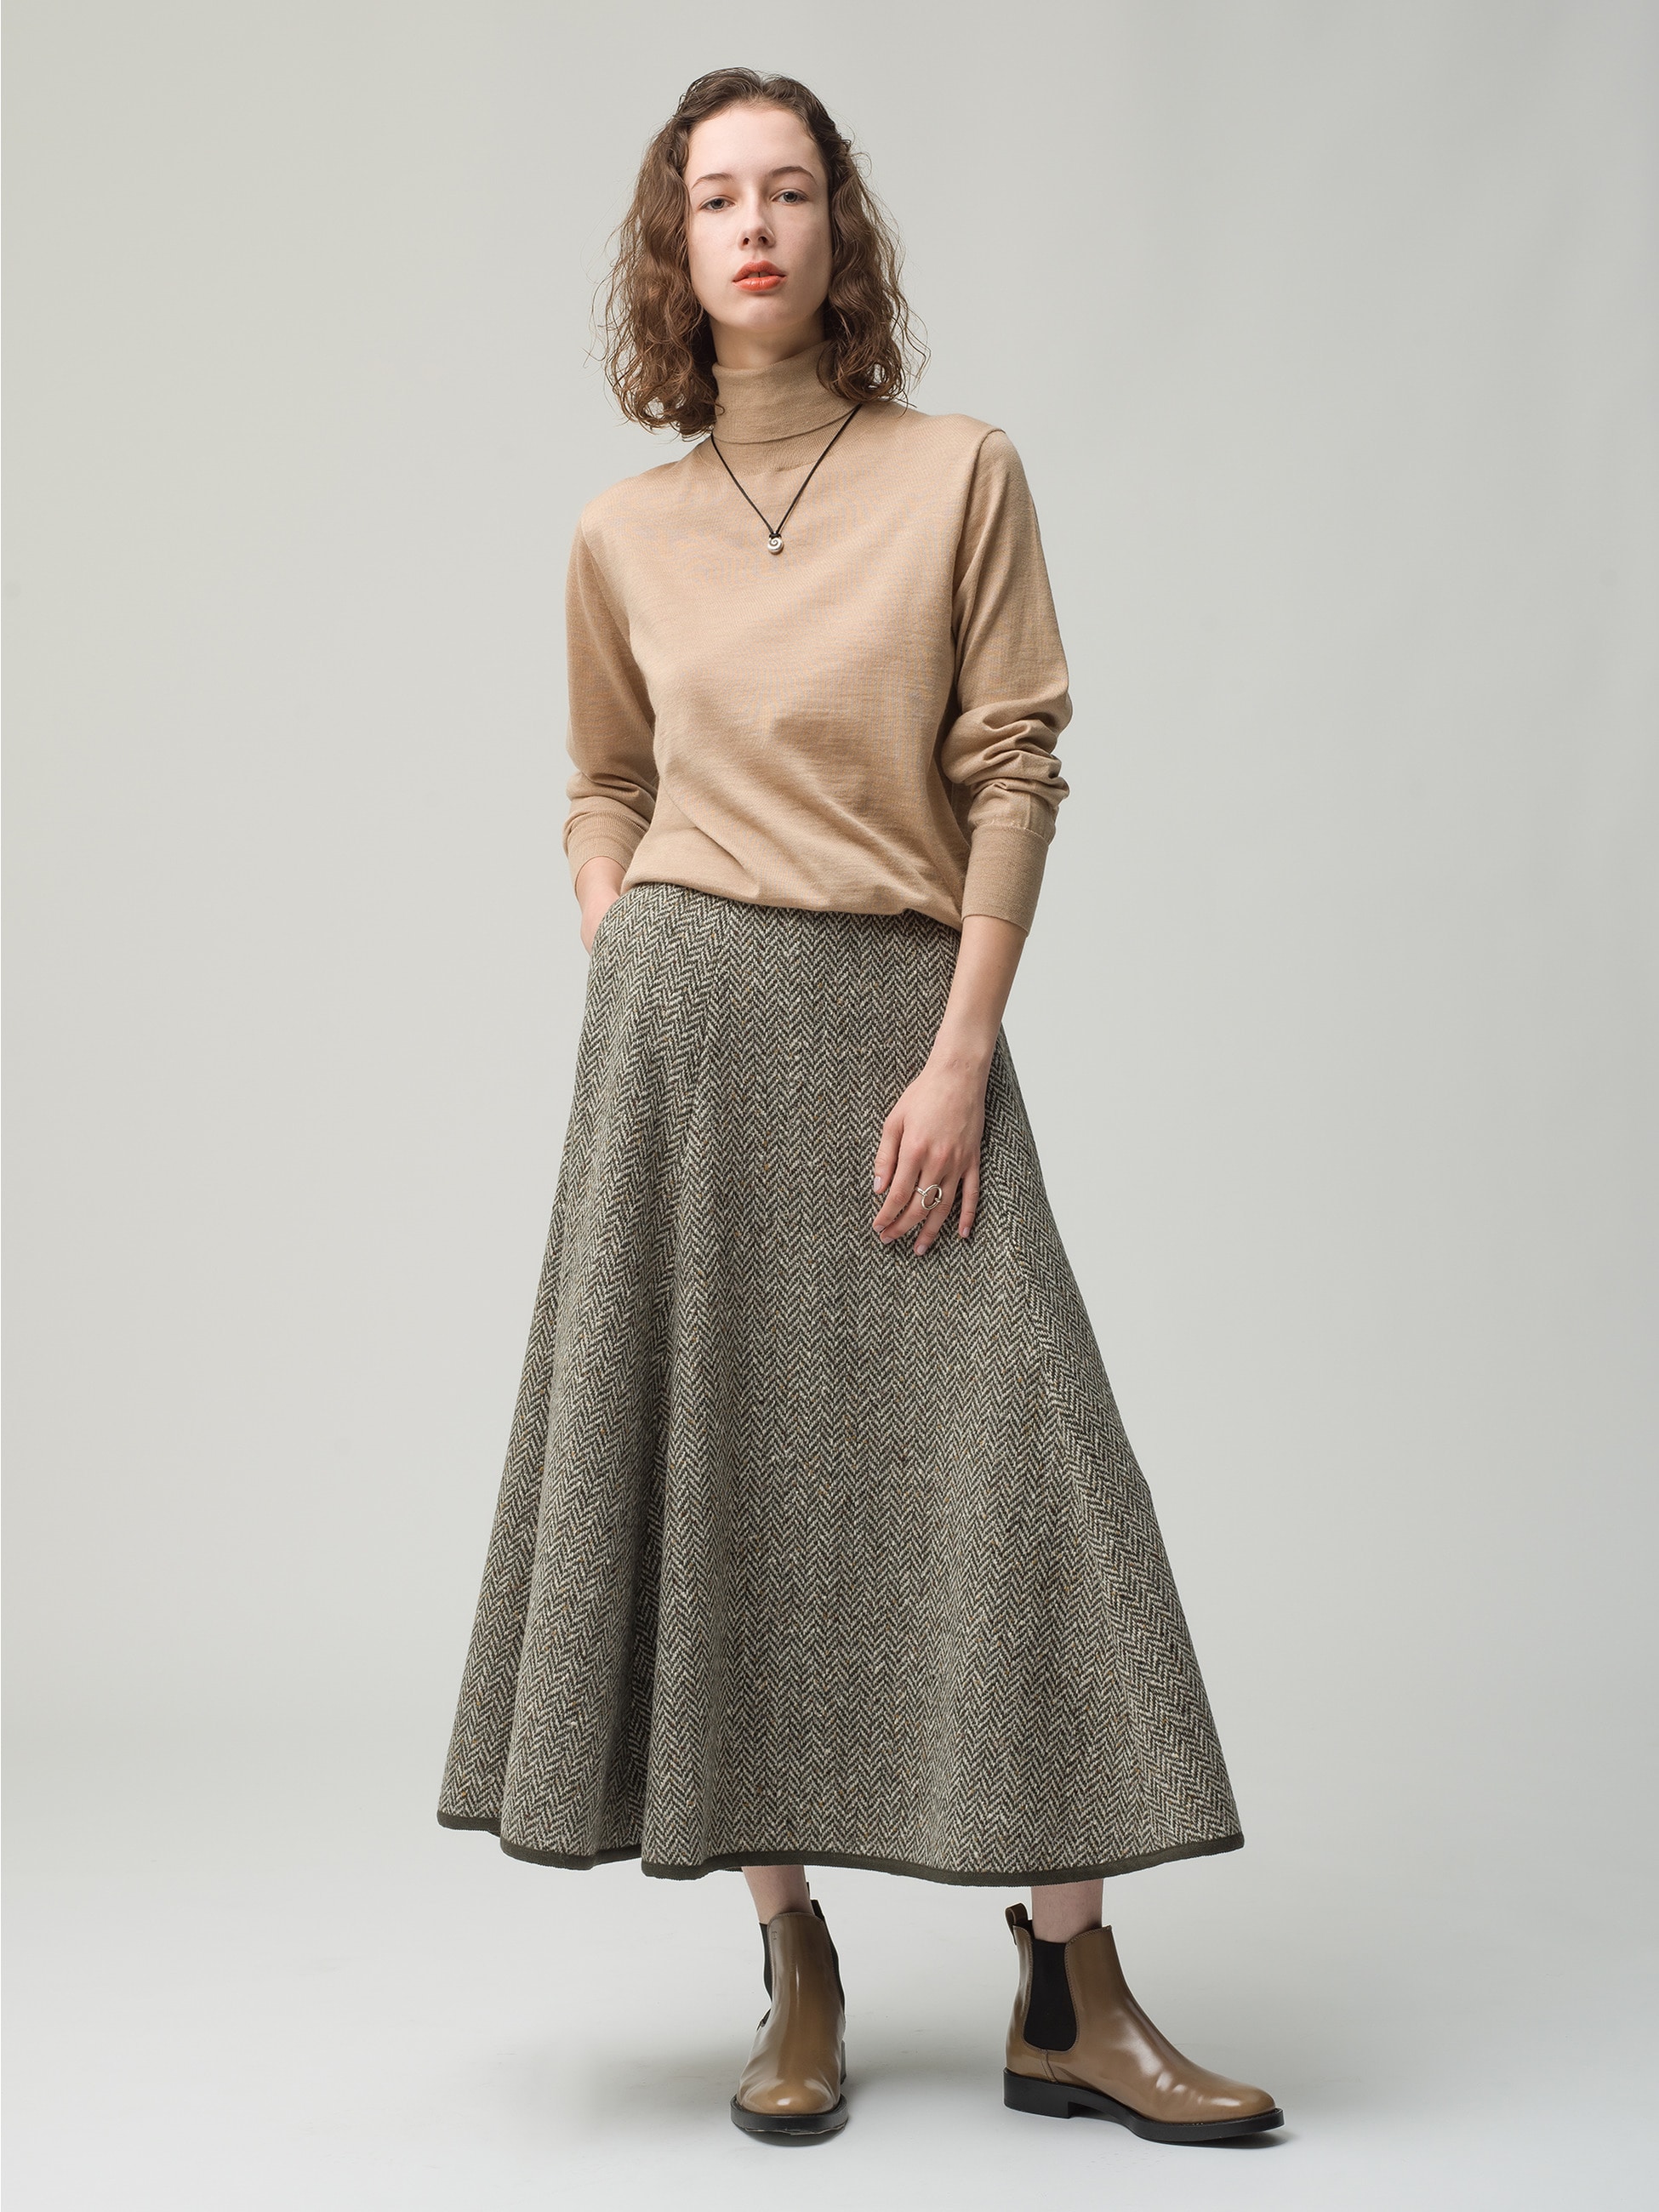 UNION LUNCH ユニオンランチ Wool Flare Skirt XSスカート